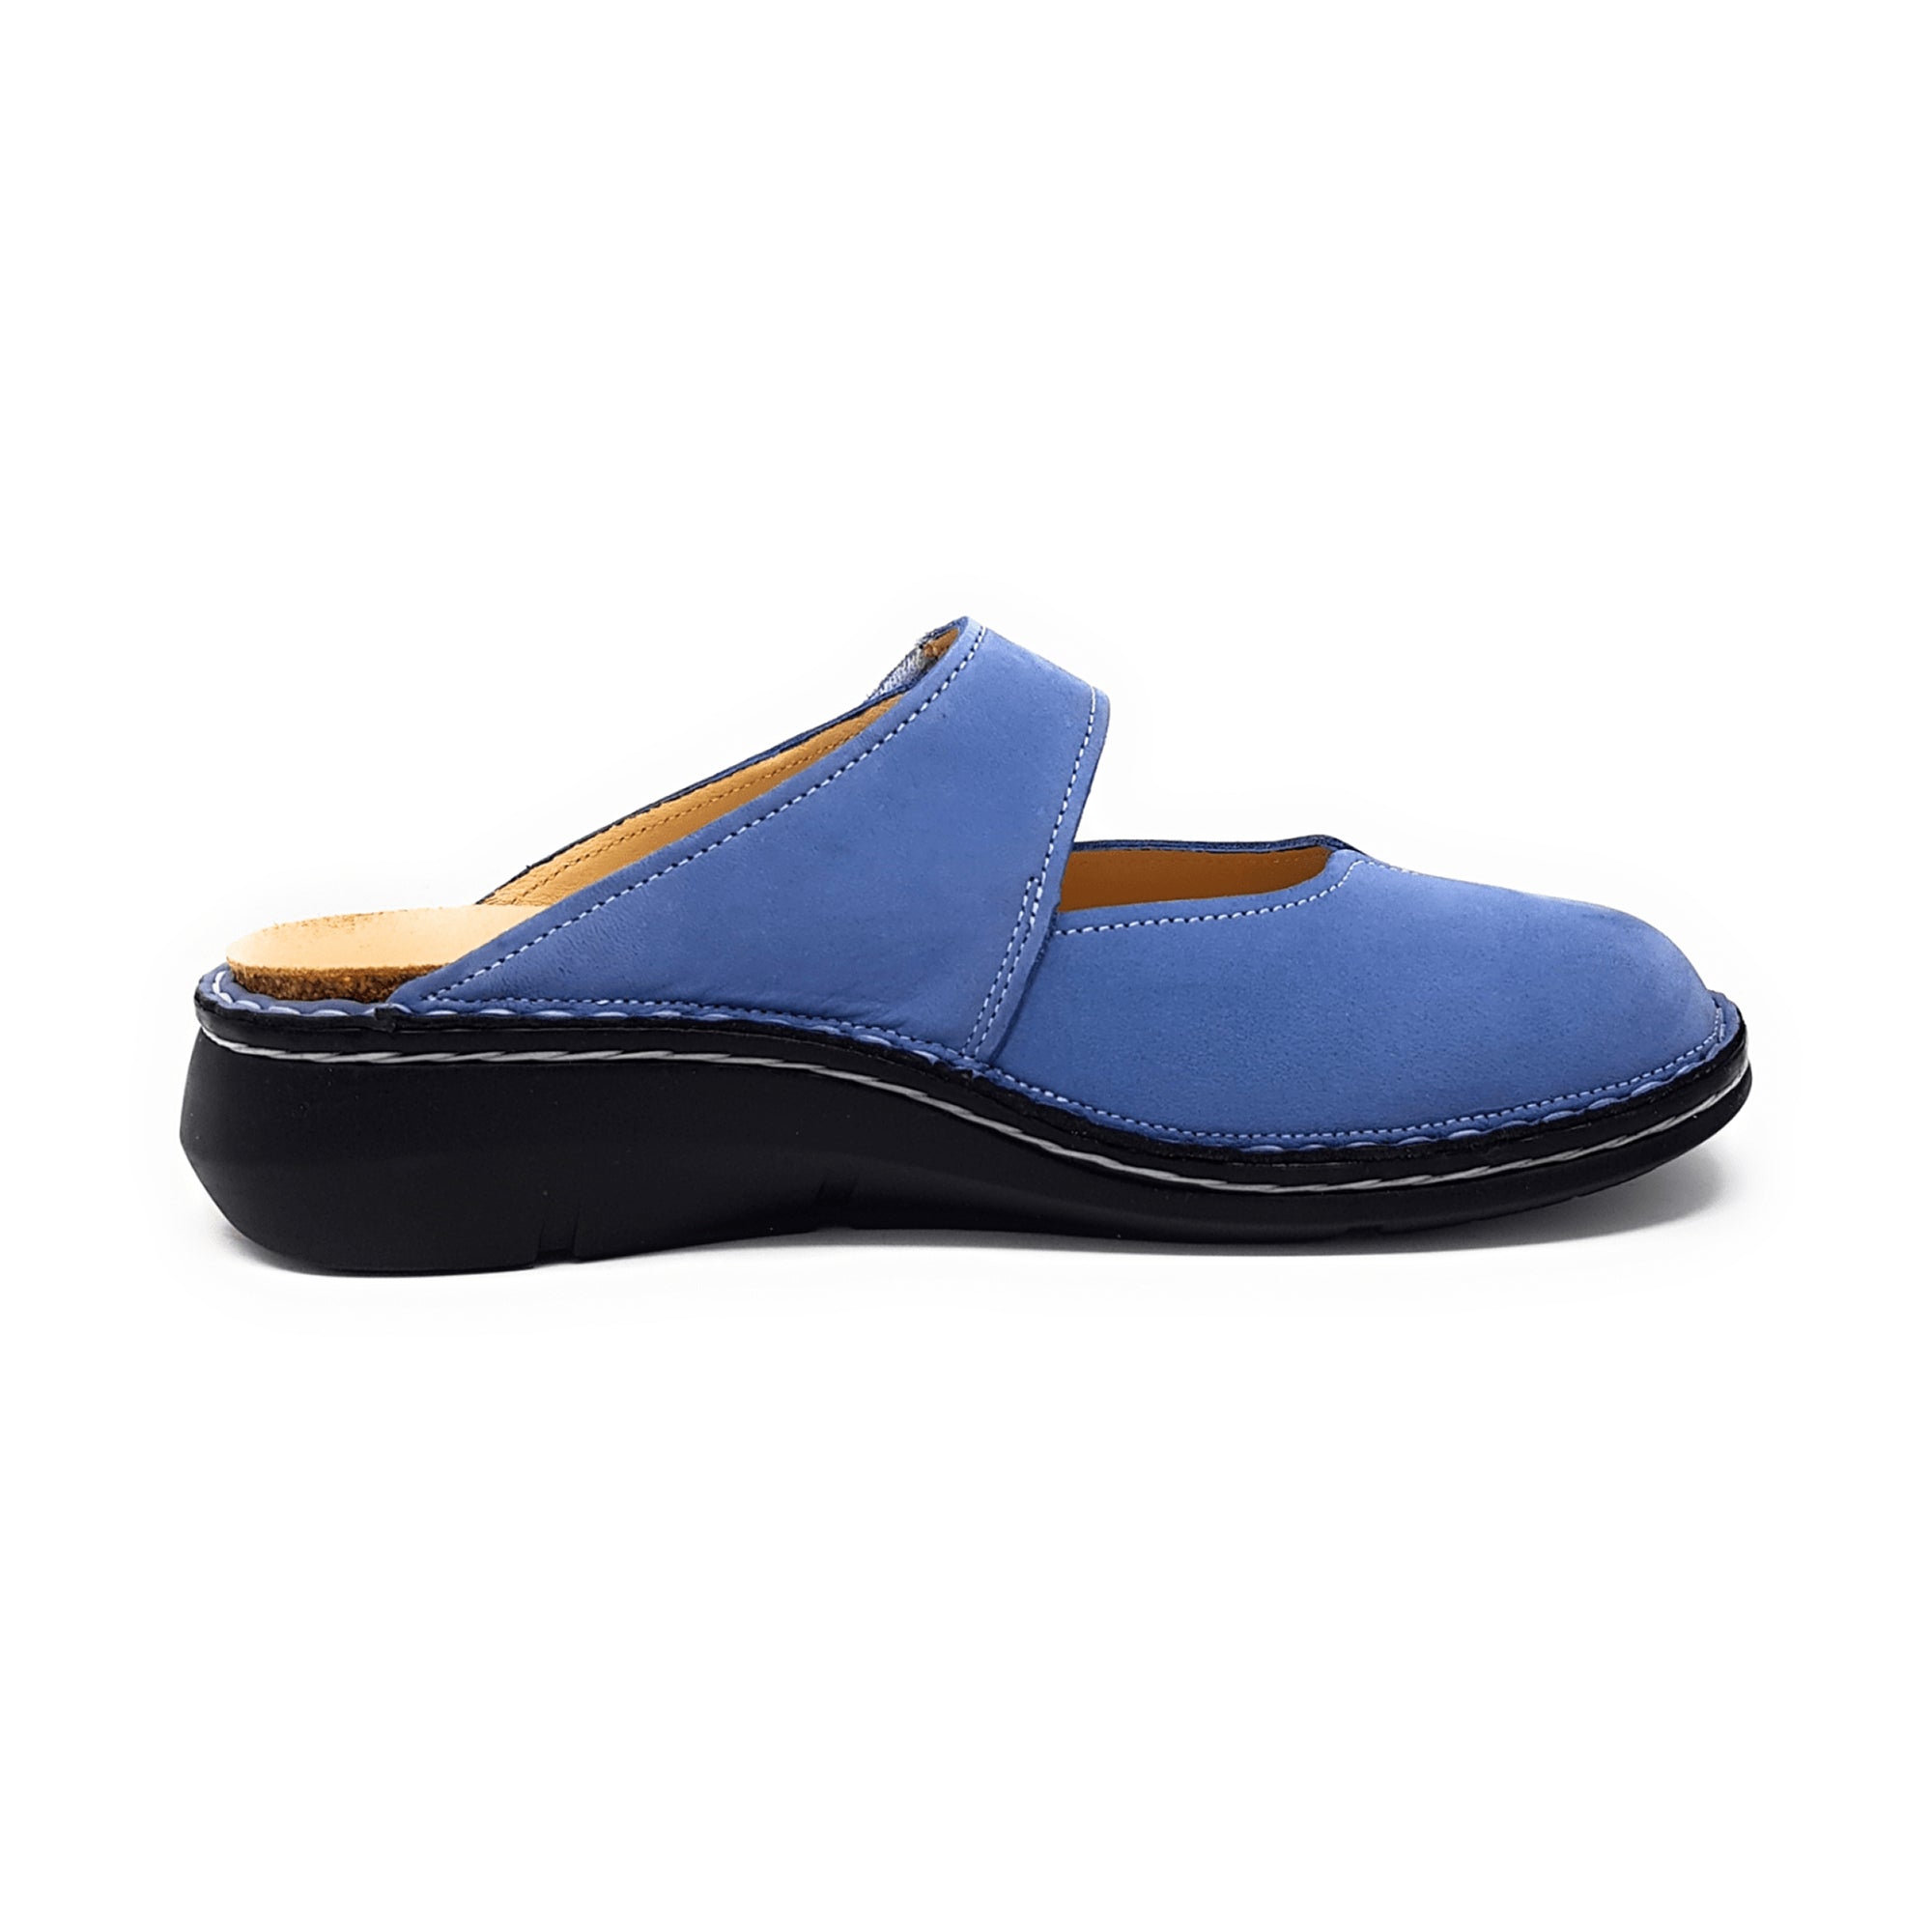 Finn Comfort Roseau Women's Comfortable Blue Sandals - Stylish & Durable